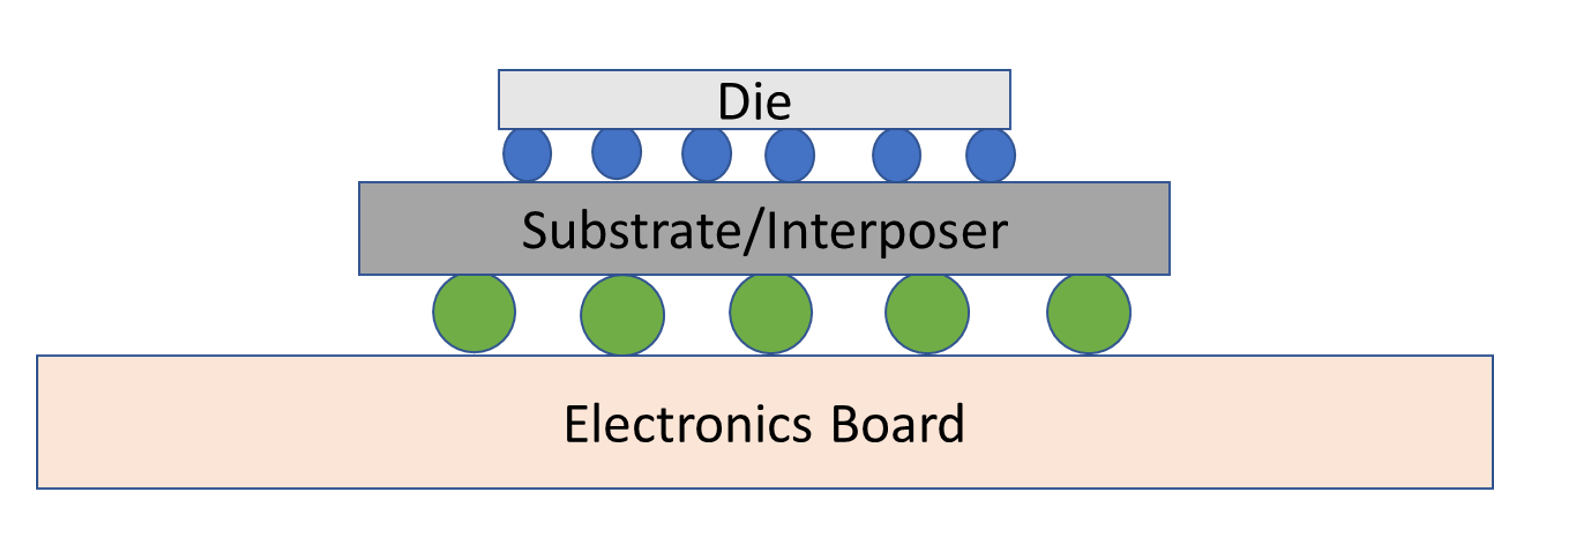 Gambar 4: Diagram konseptual kemasan flip-chip. Sumber: A. Meixner/Teknik Semikonduktor